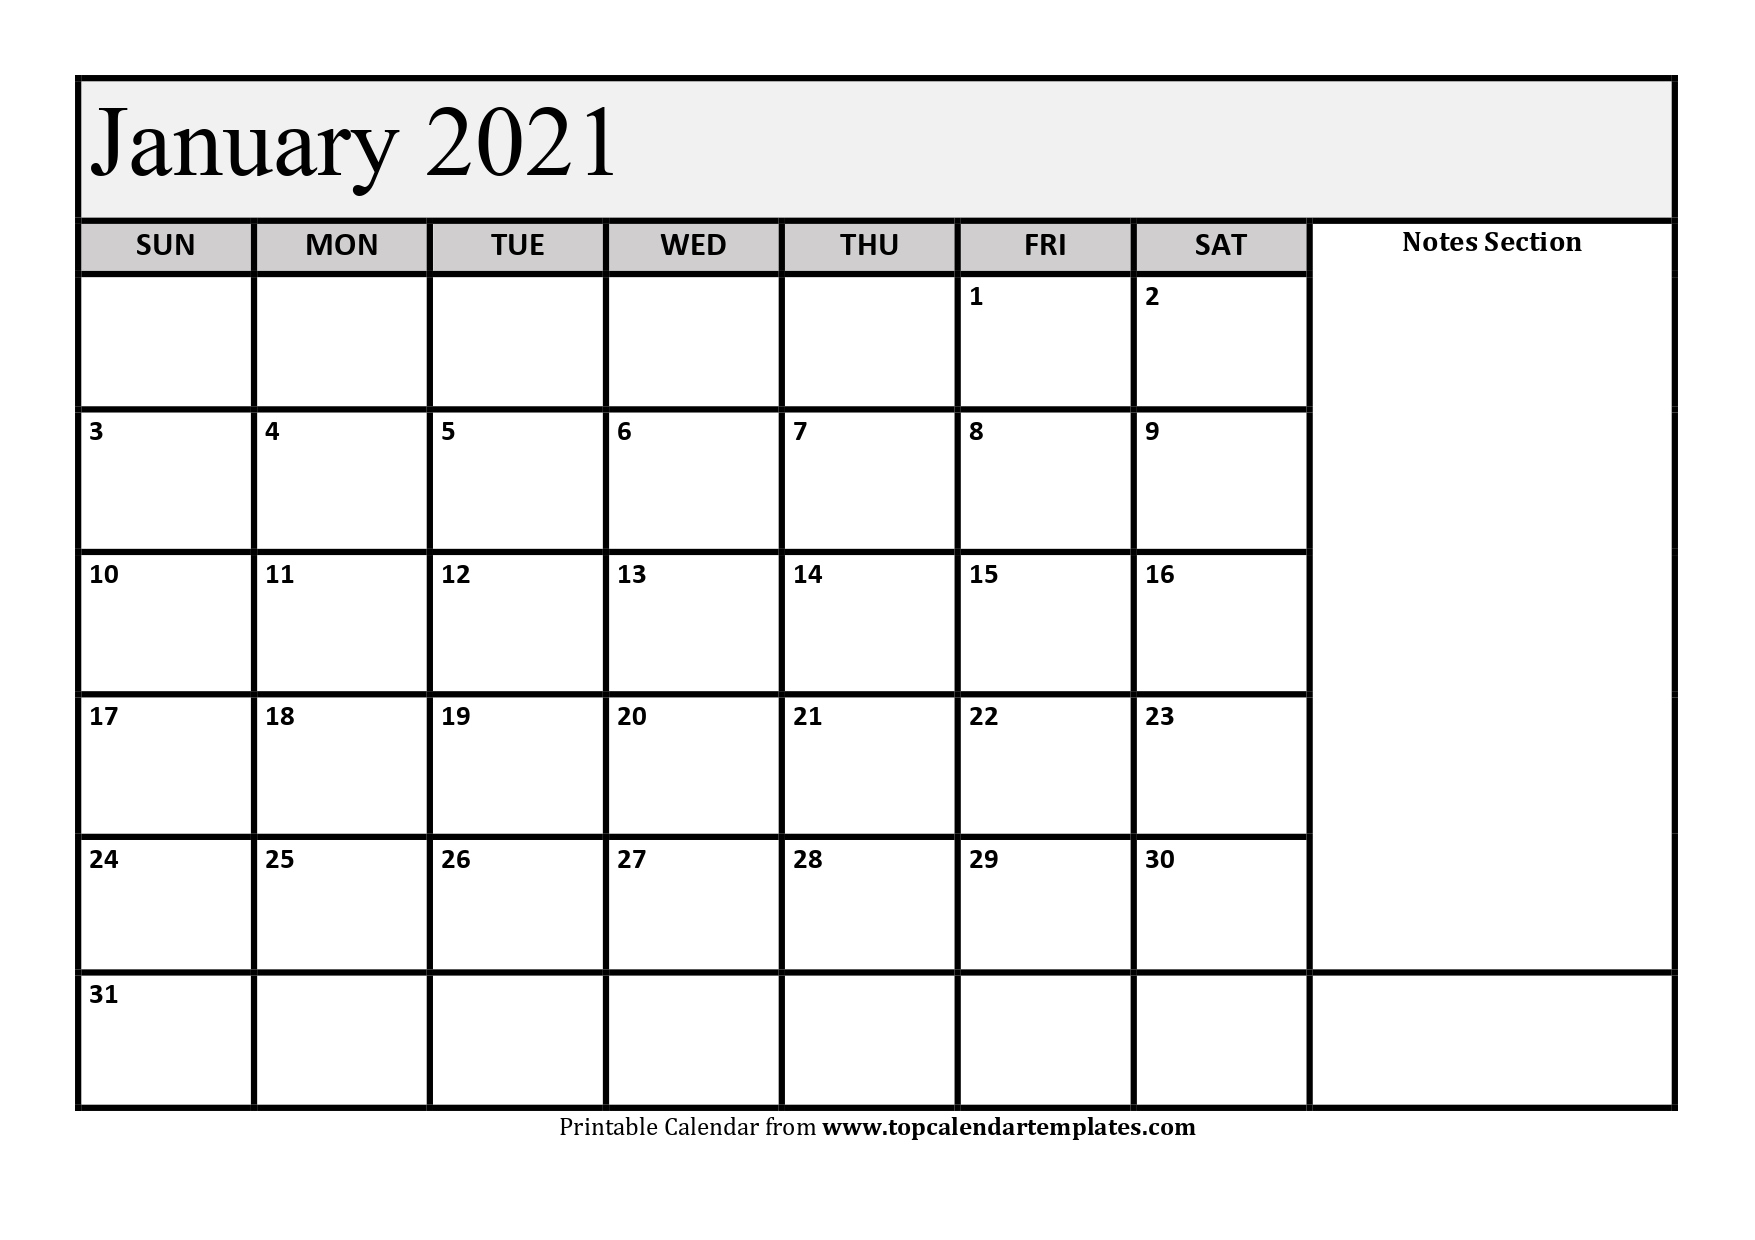 Free January 2021 Calendar Printable - Monthly Template 2021 Monthly Calendar January To December 2021 Calendar Printable